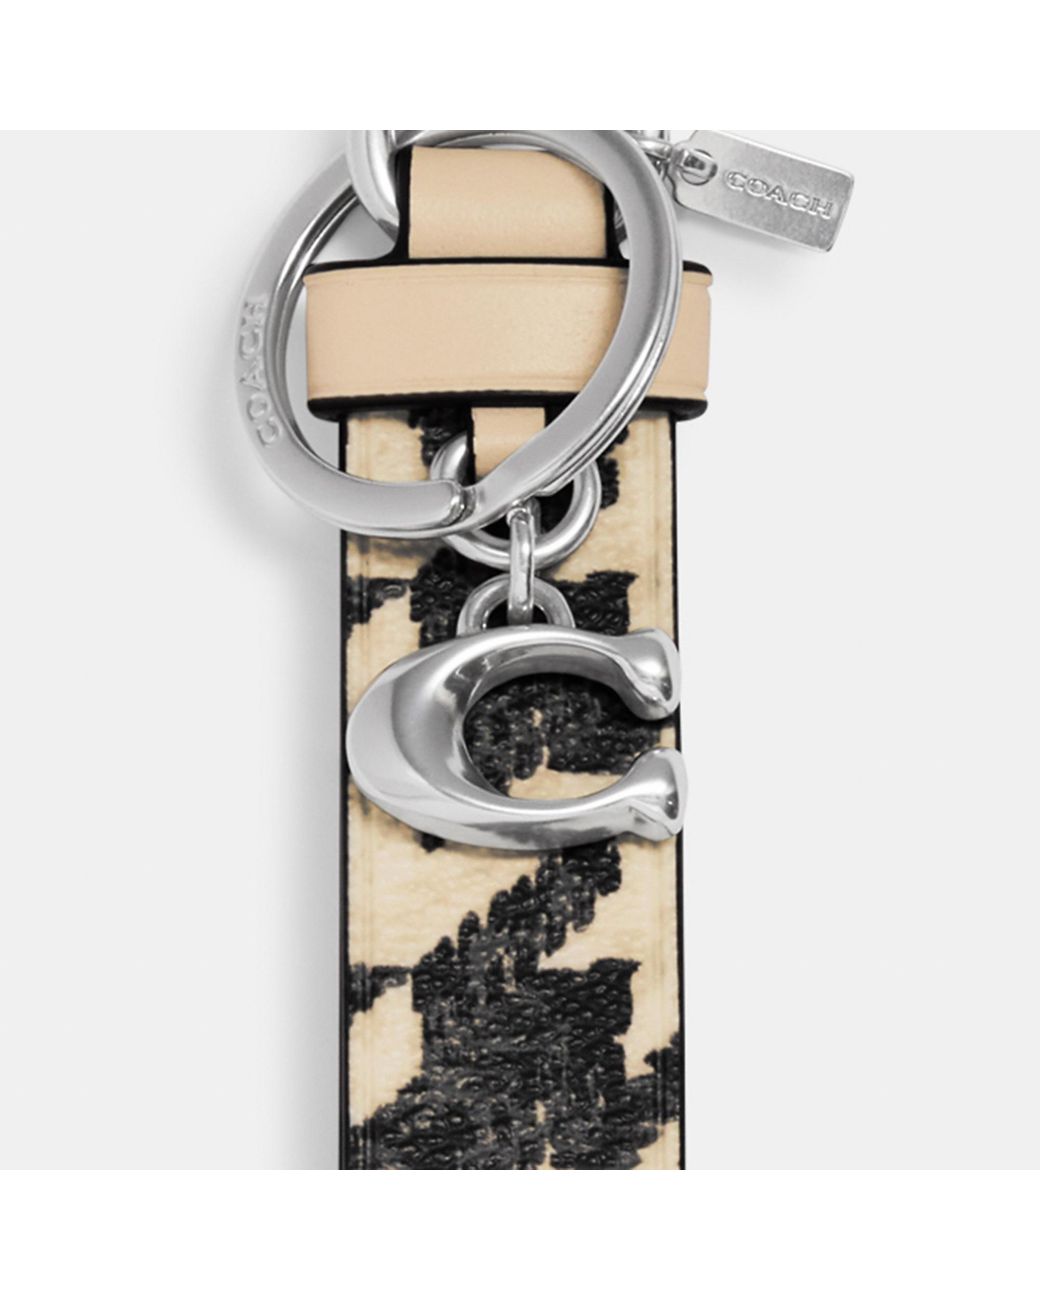 Coach Keychain Bag Charm Leather Loop  Wrist accessories, Bag charm, Coach  keychain